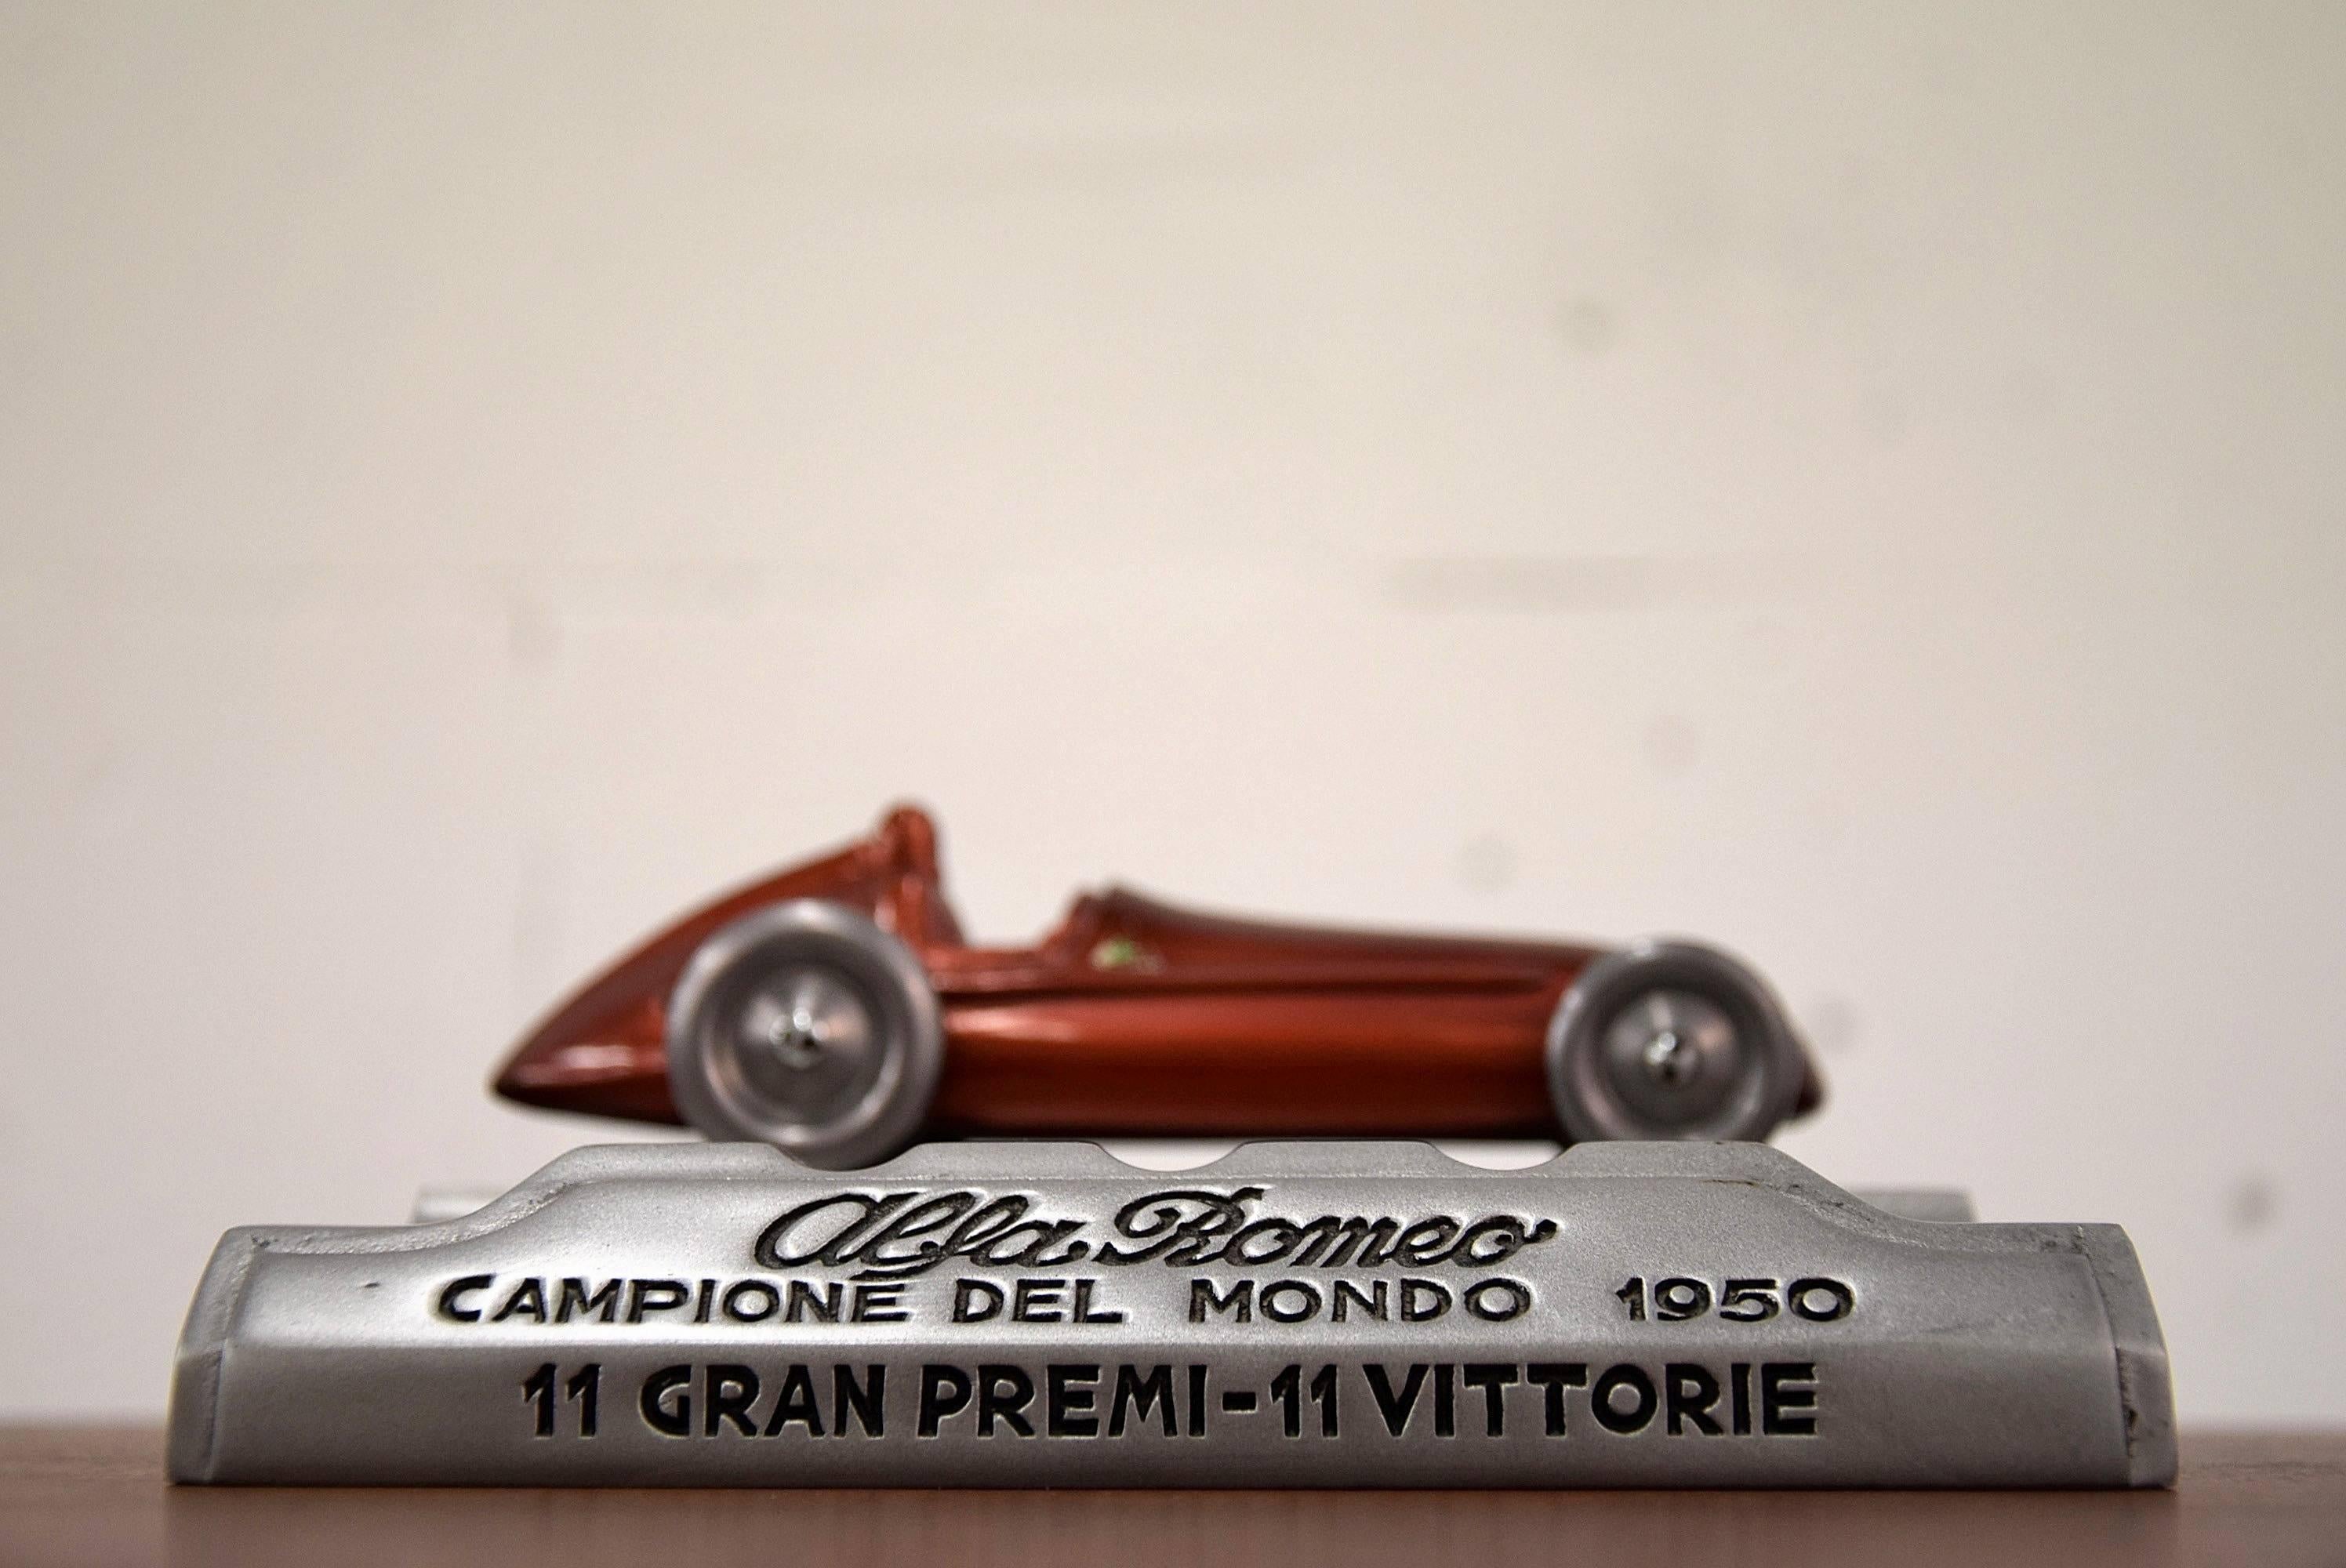 Italian Alfa Romeo, 1950 World Champion